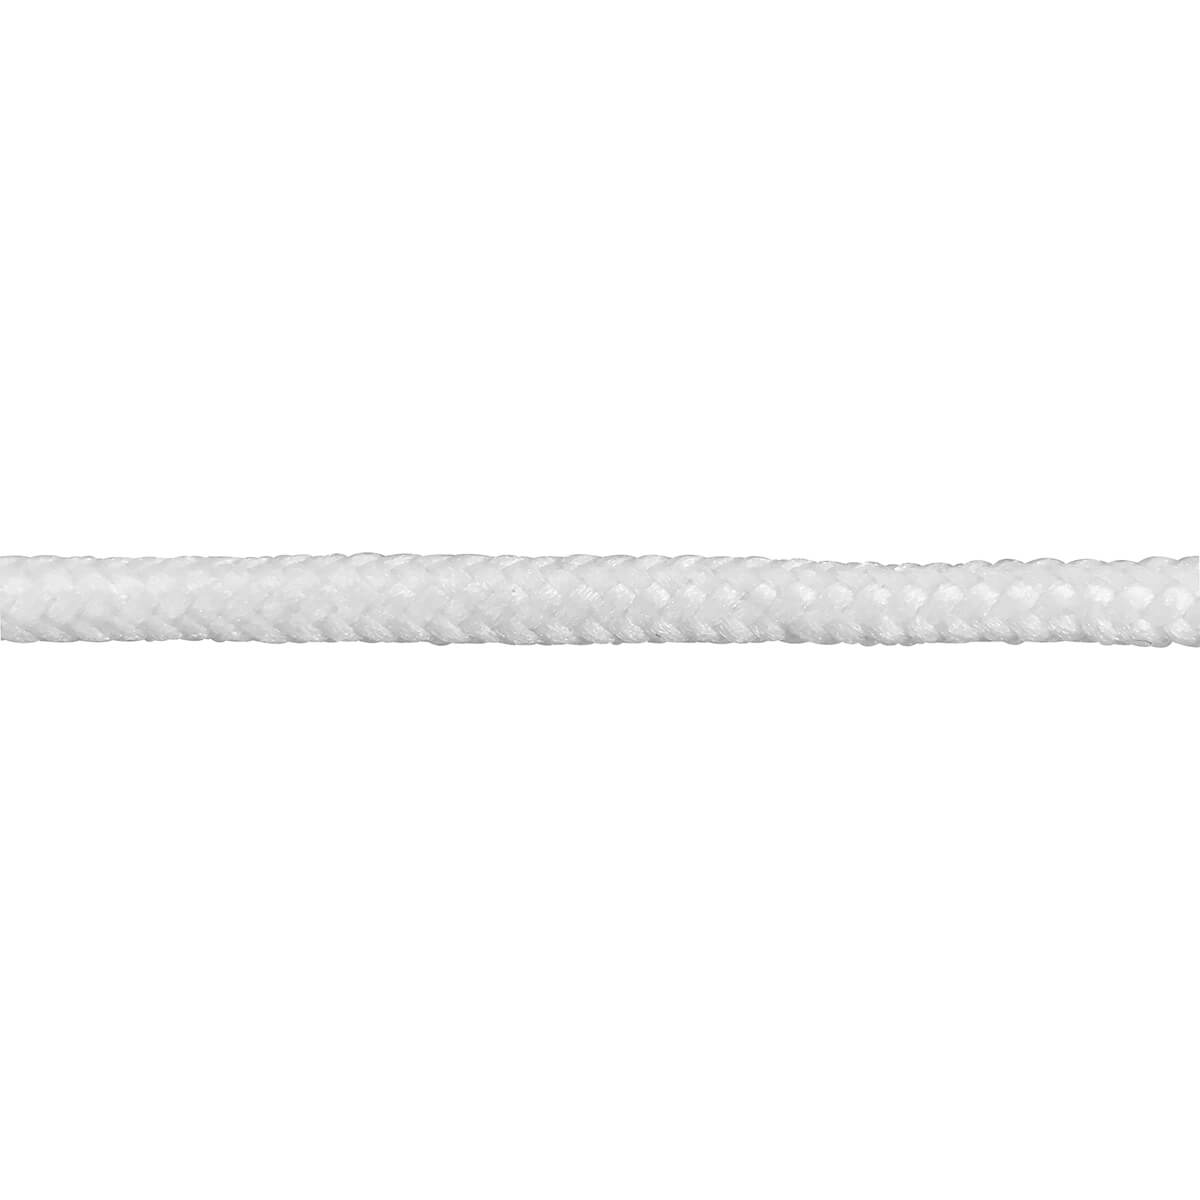 Cotton Braided Rope - White